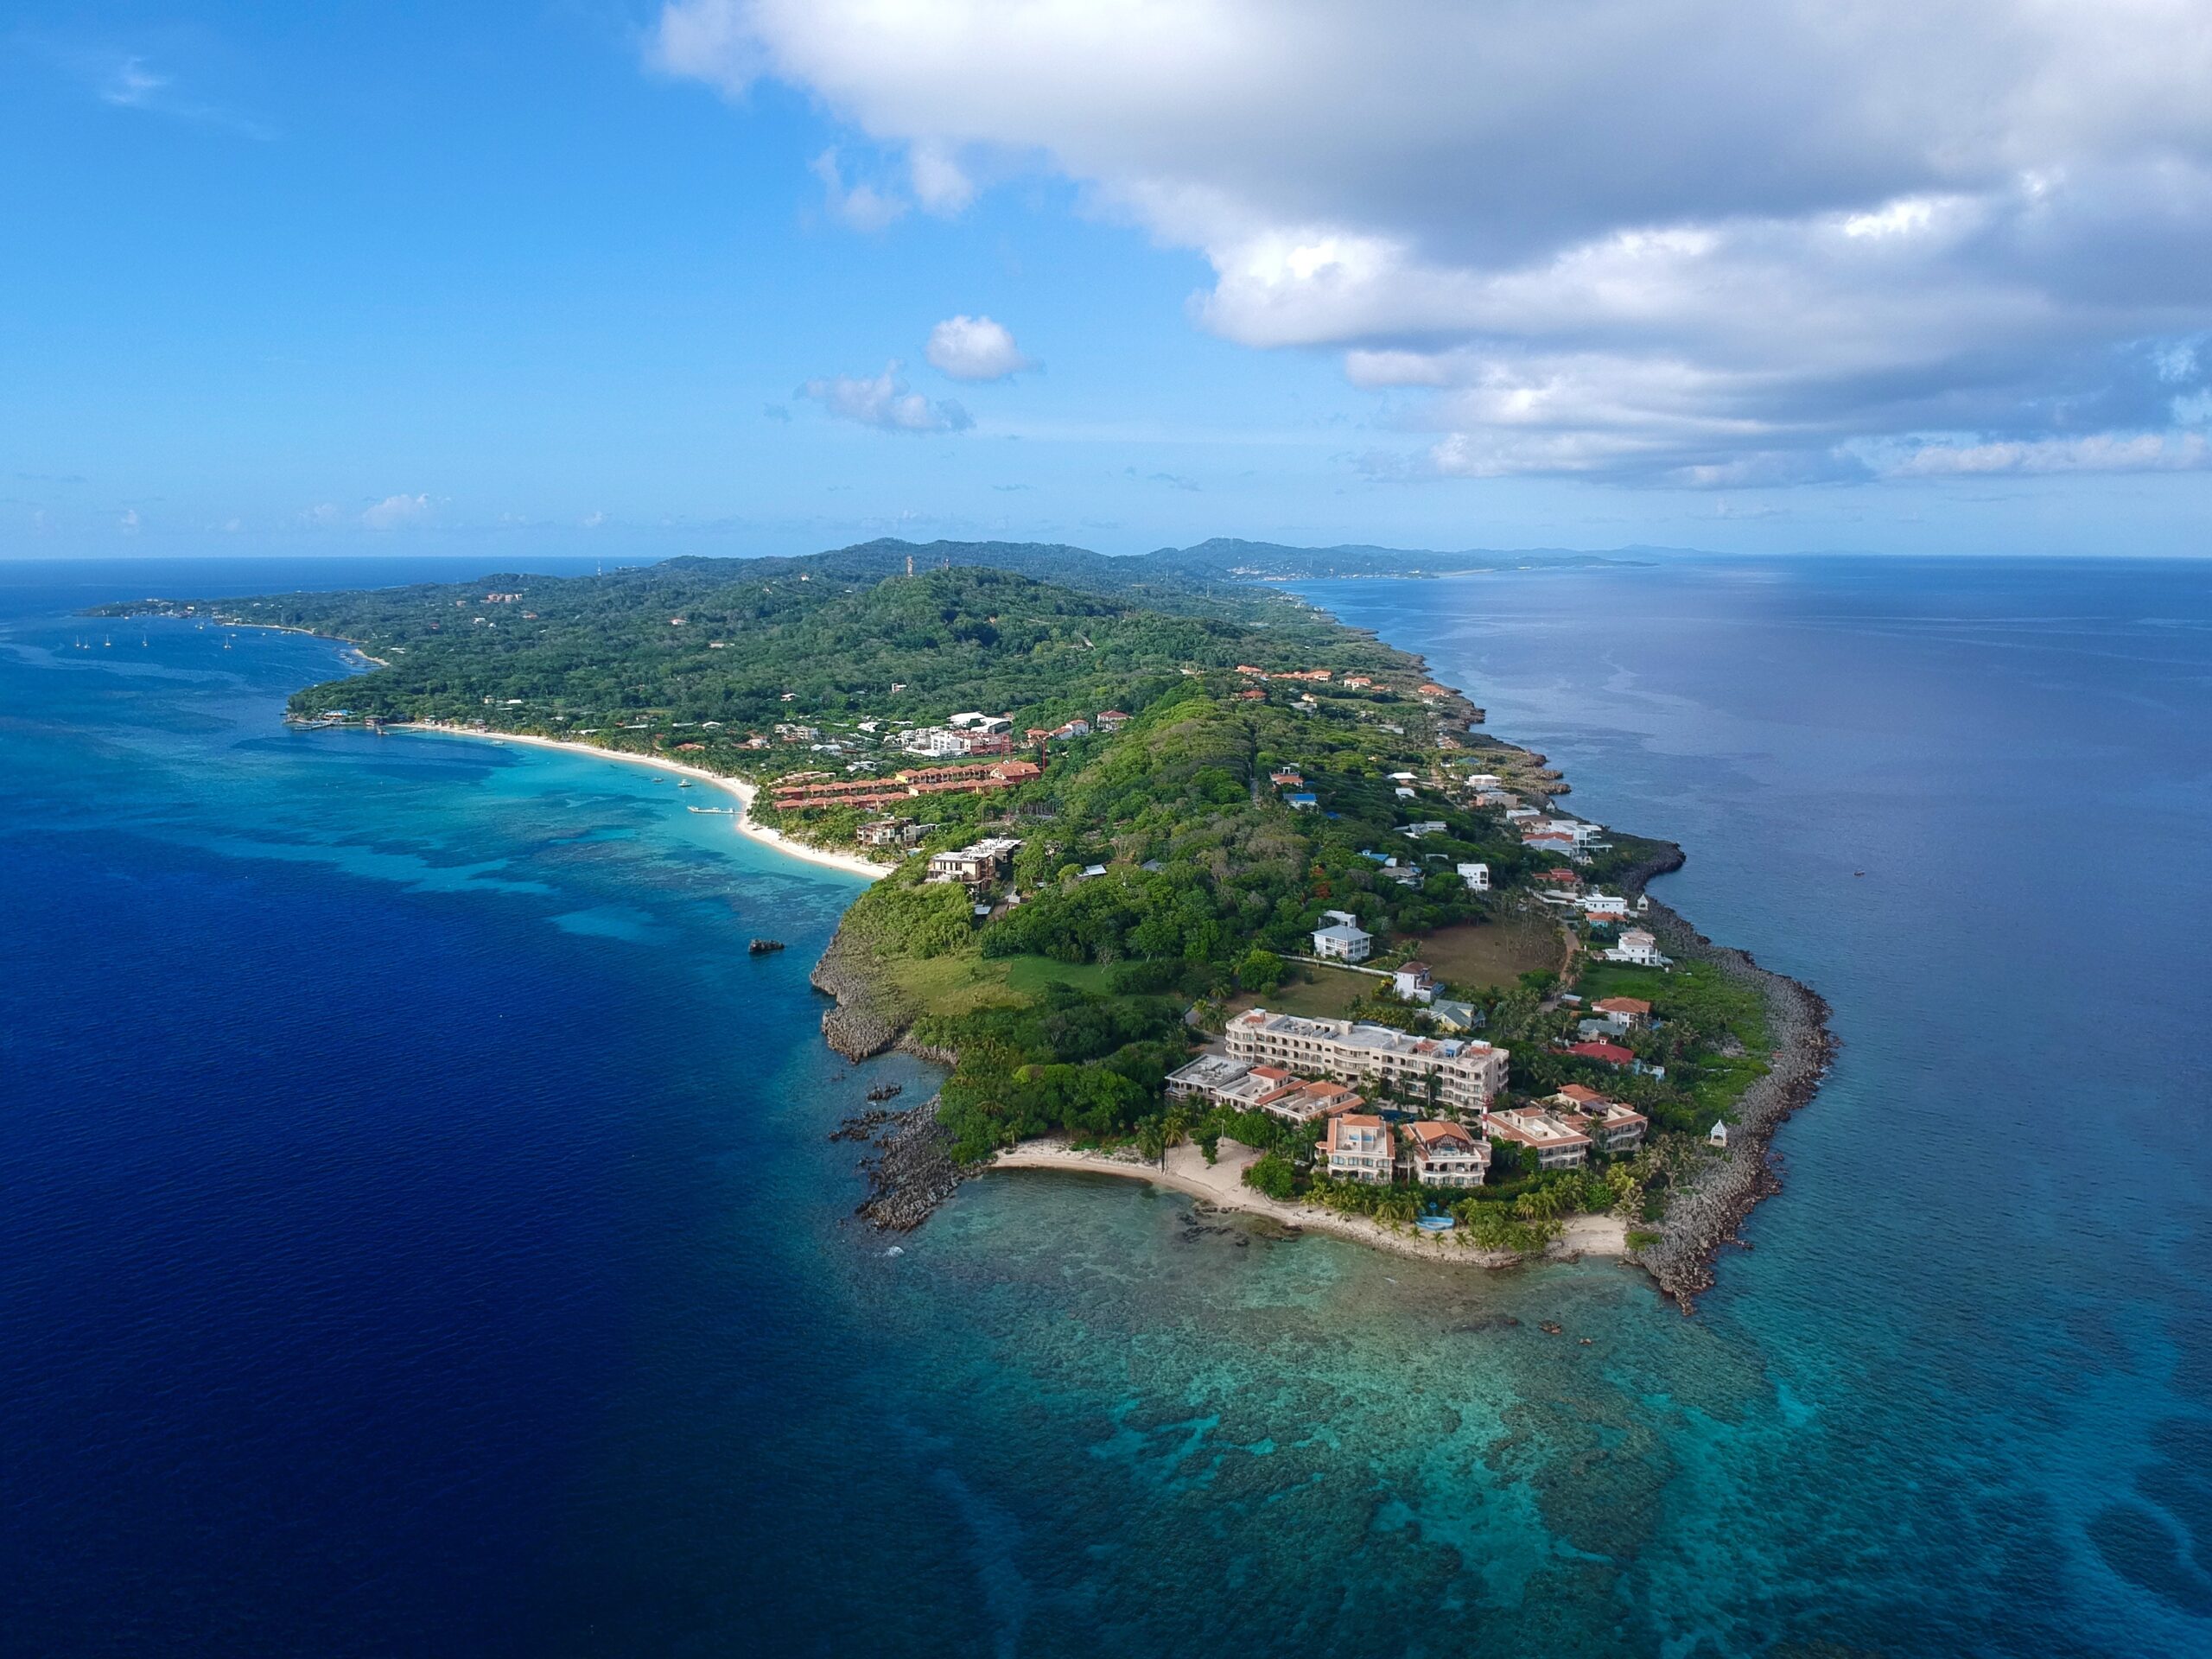 Drone photo of Roatan Island